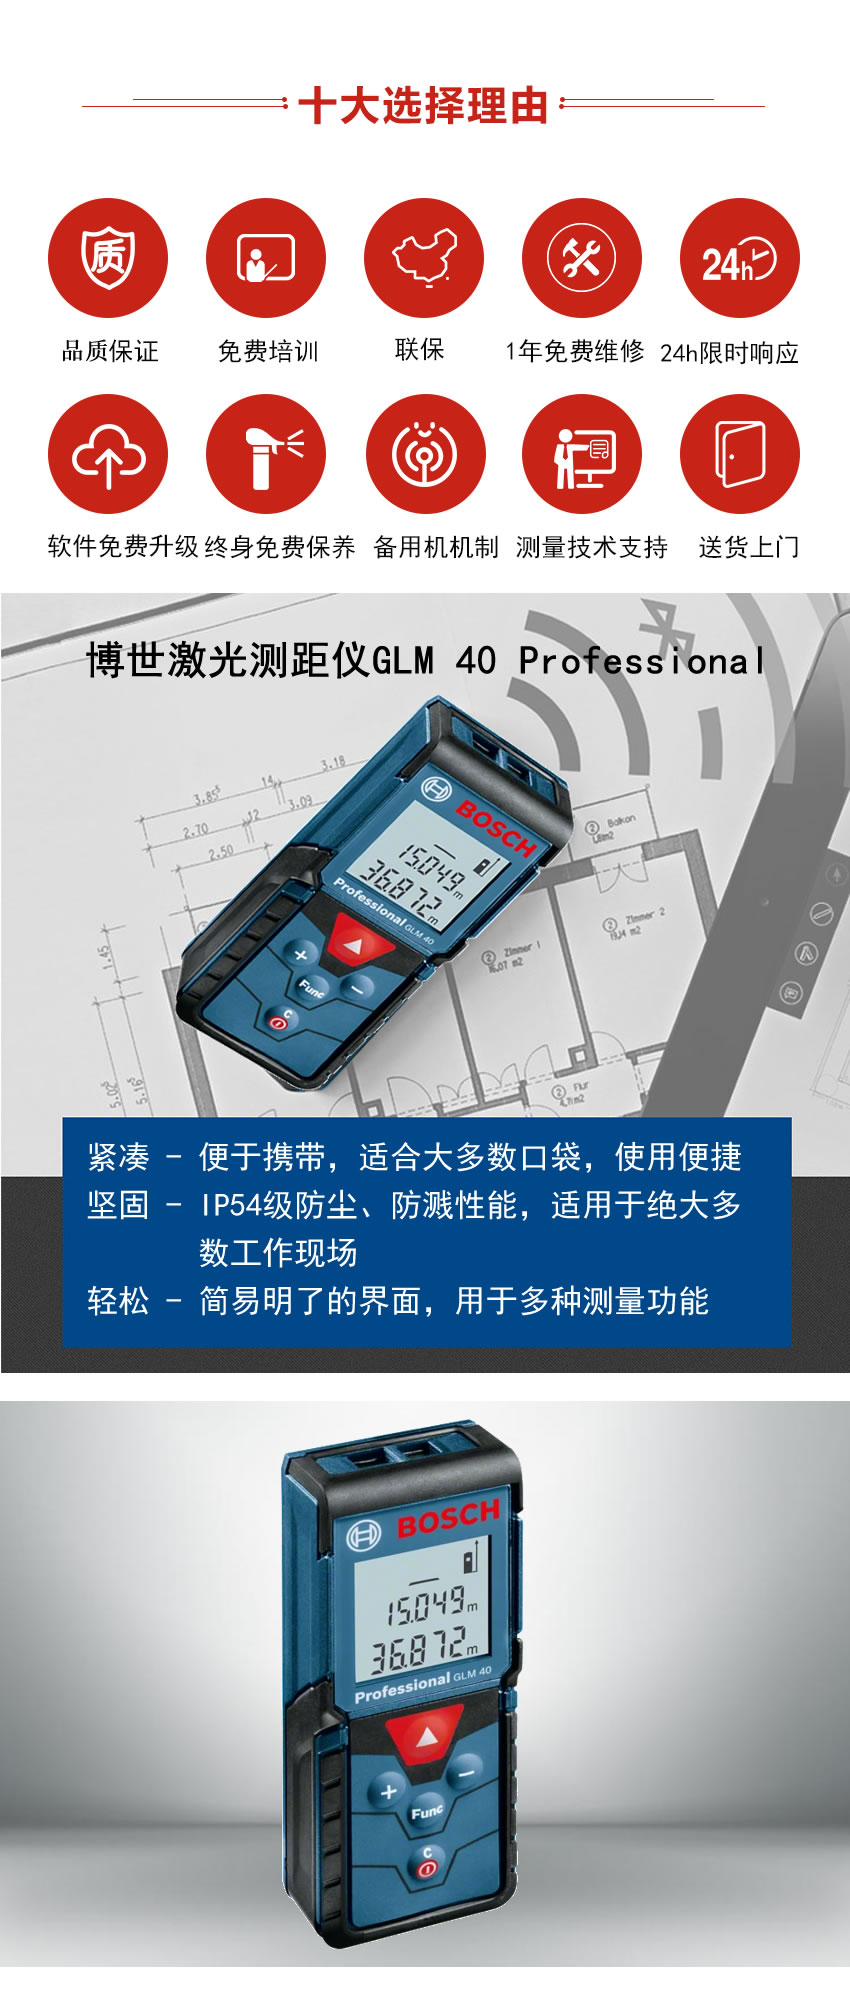 博世激光测距仪GLM 40 Professional.jpg